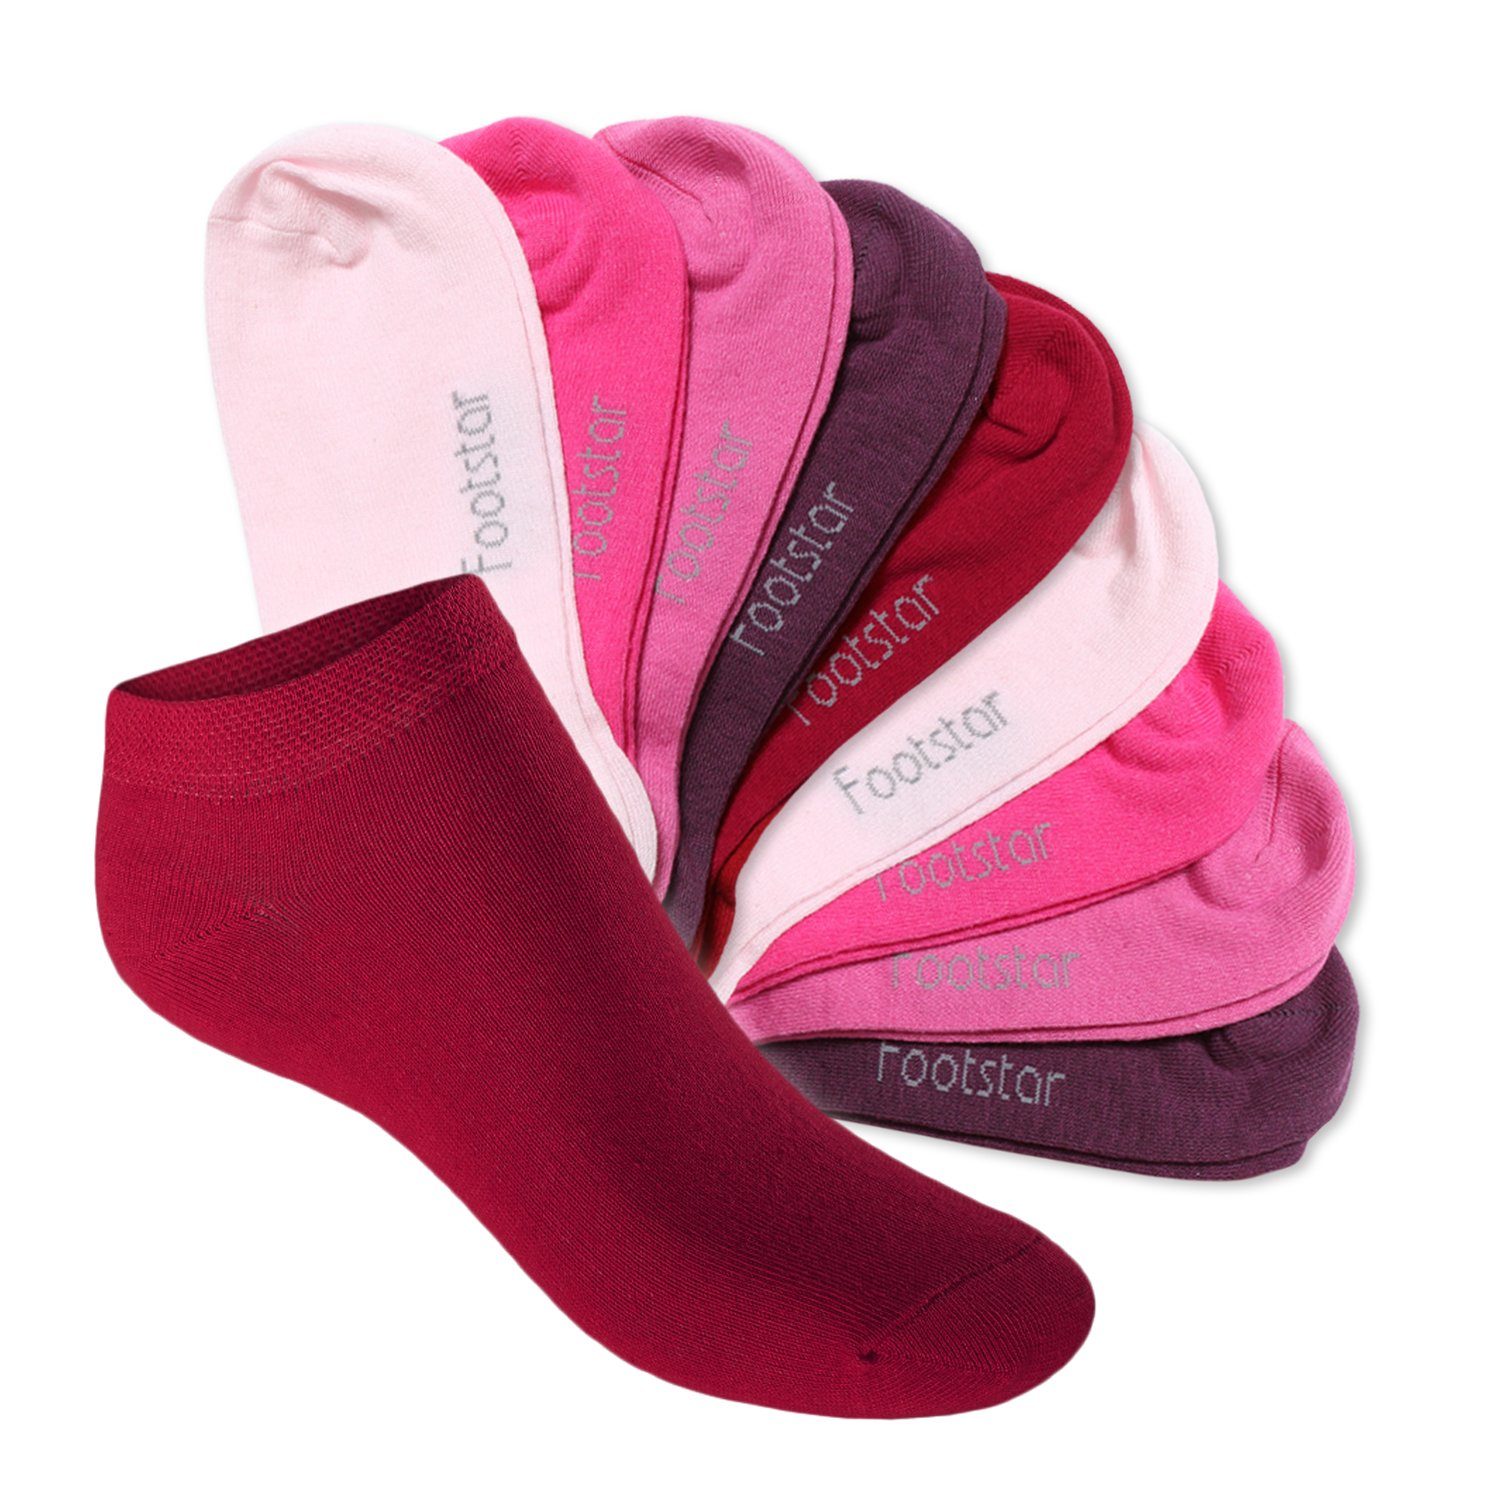 Footstar Kurzsocken Kinder Sneaker Socken (10 Paar) - Kurze Socken für Kids Berrytöne